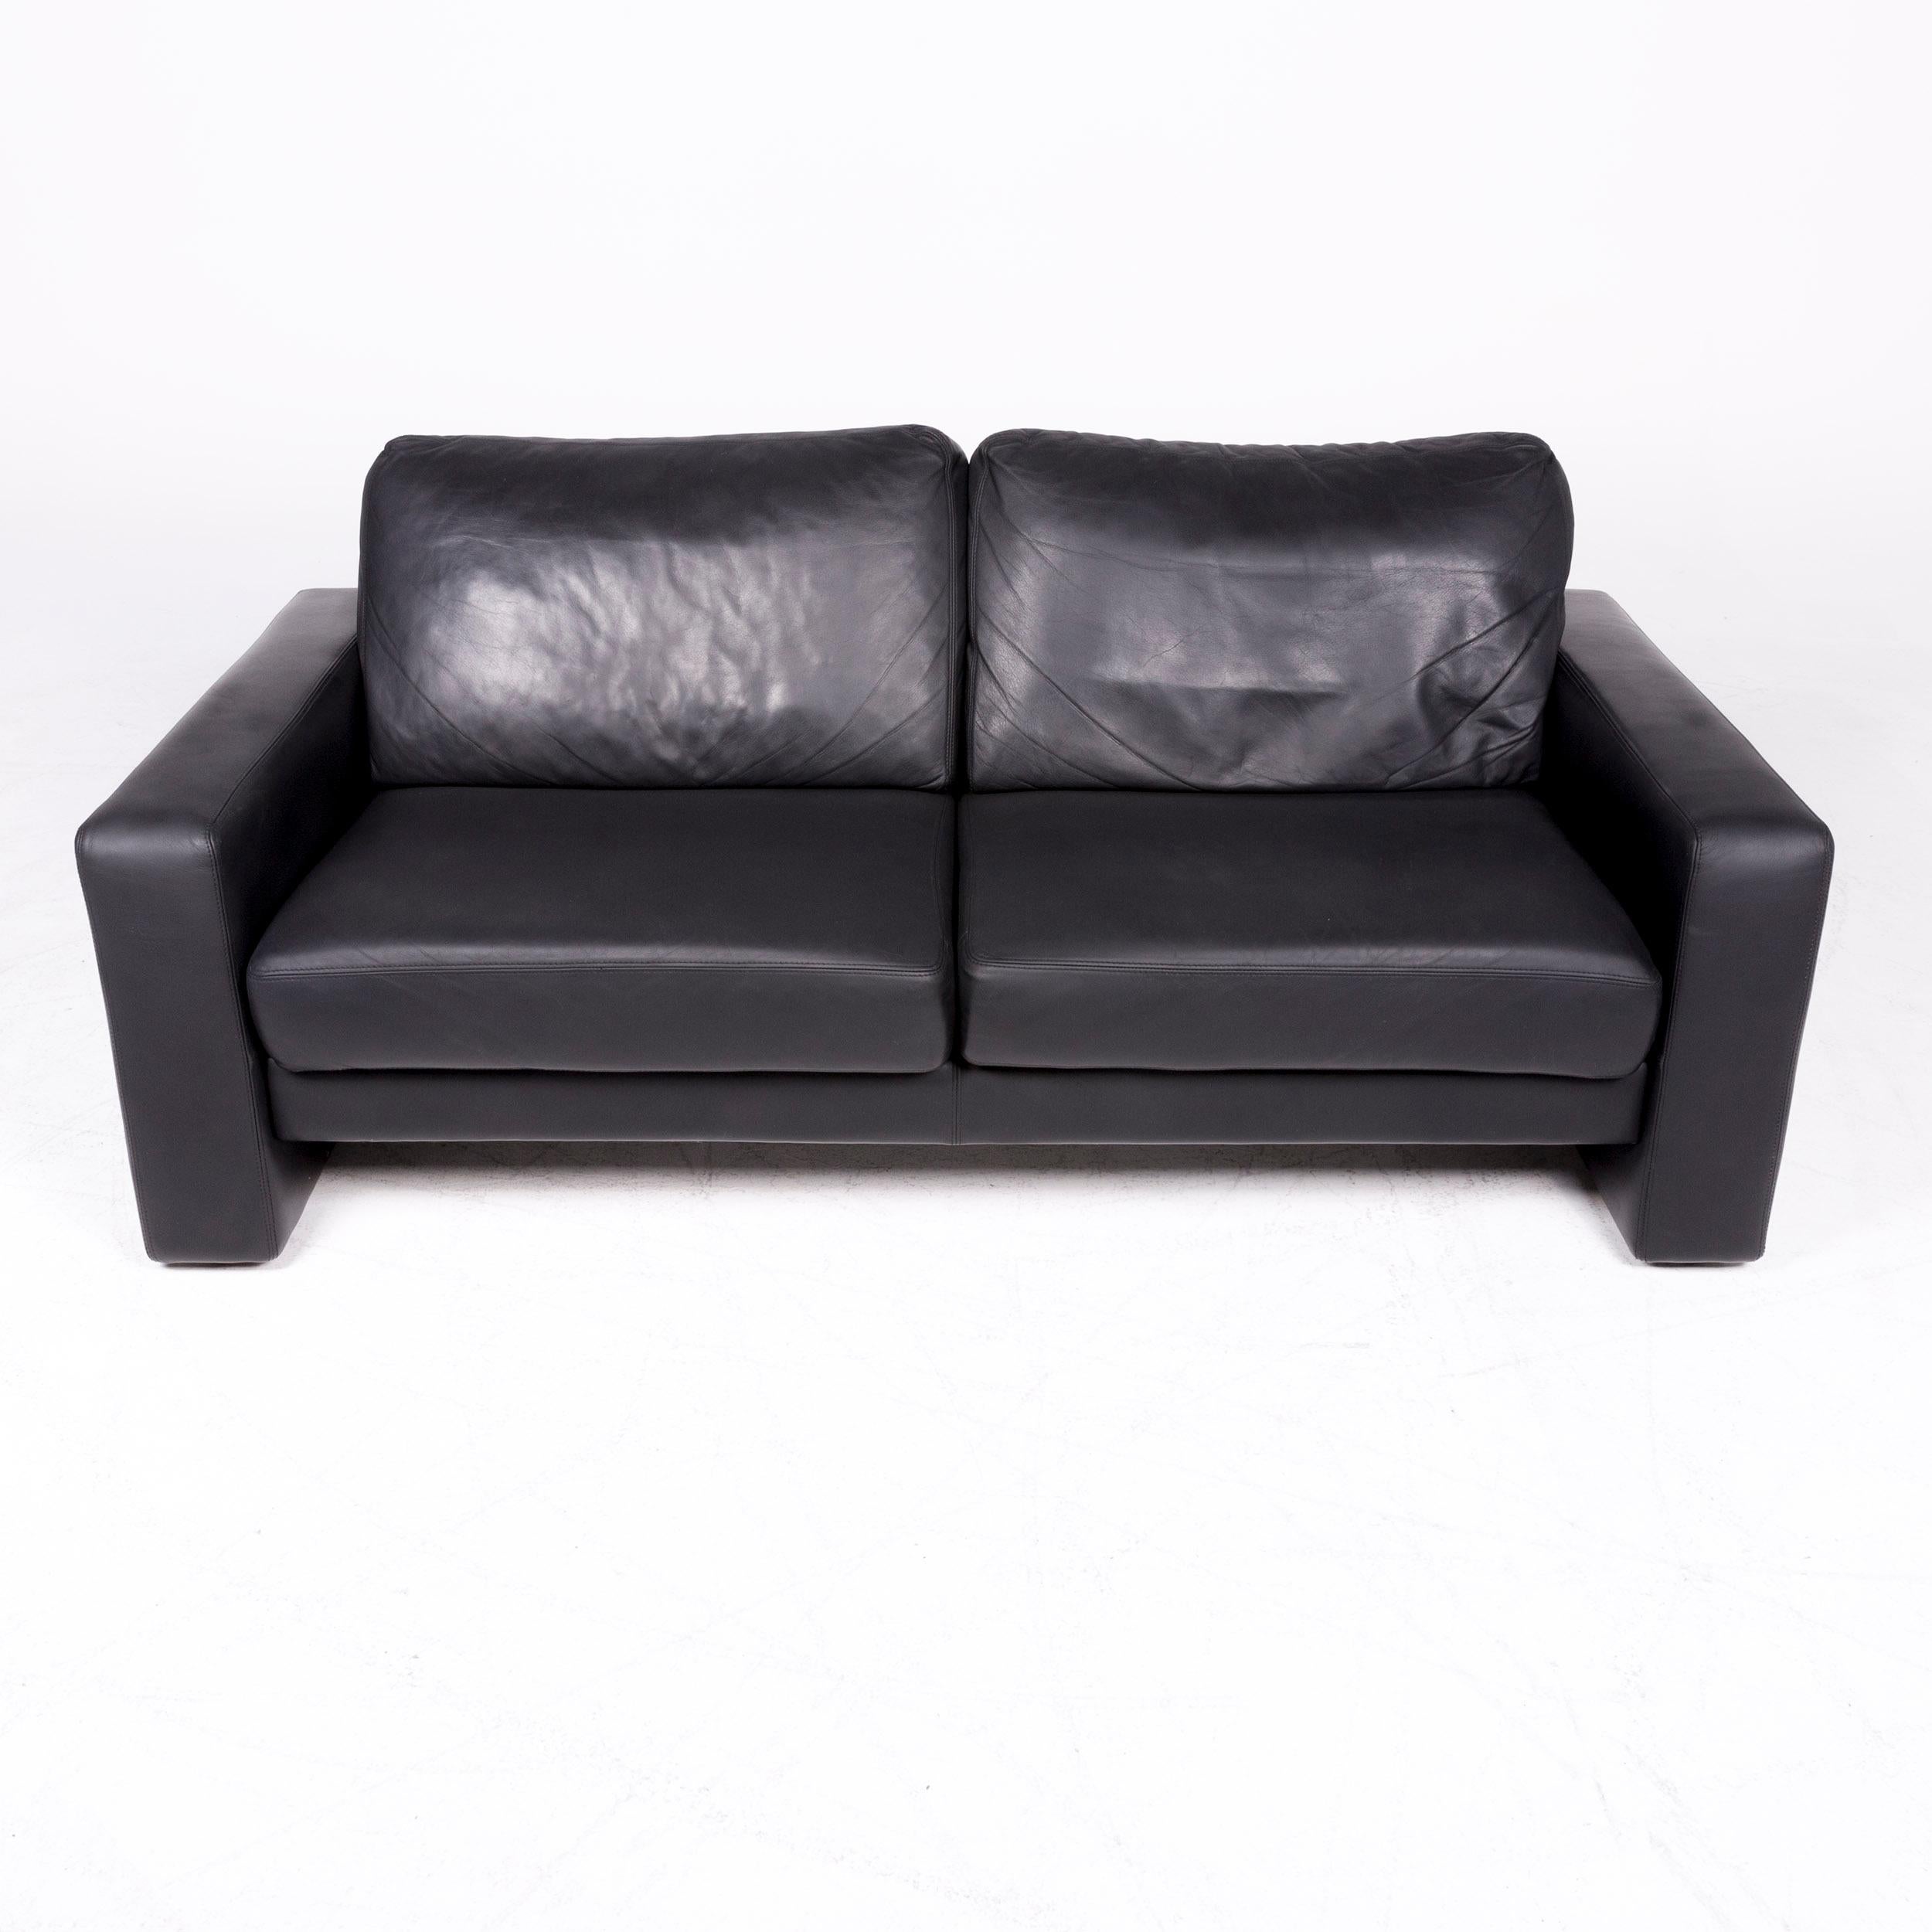 European Schröno Designer Leather Sofa Black Genuine Leather Two-Seat Couch